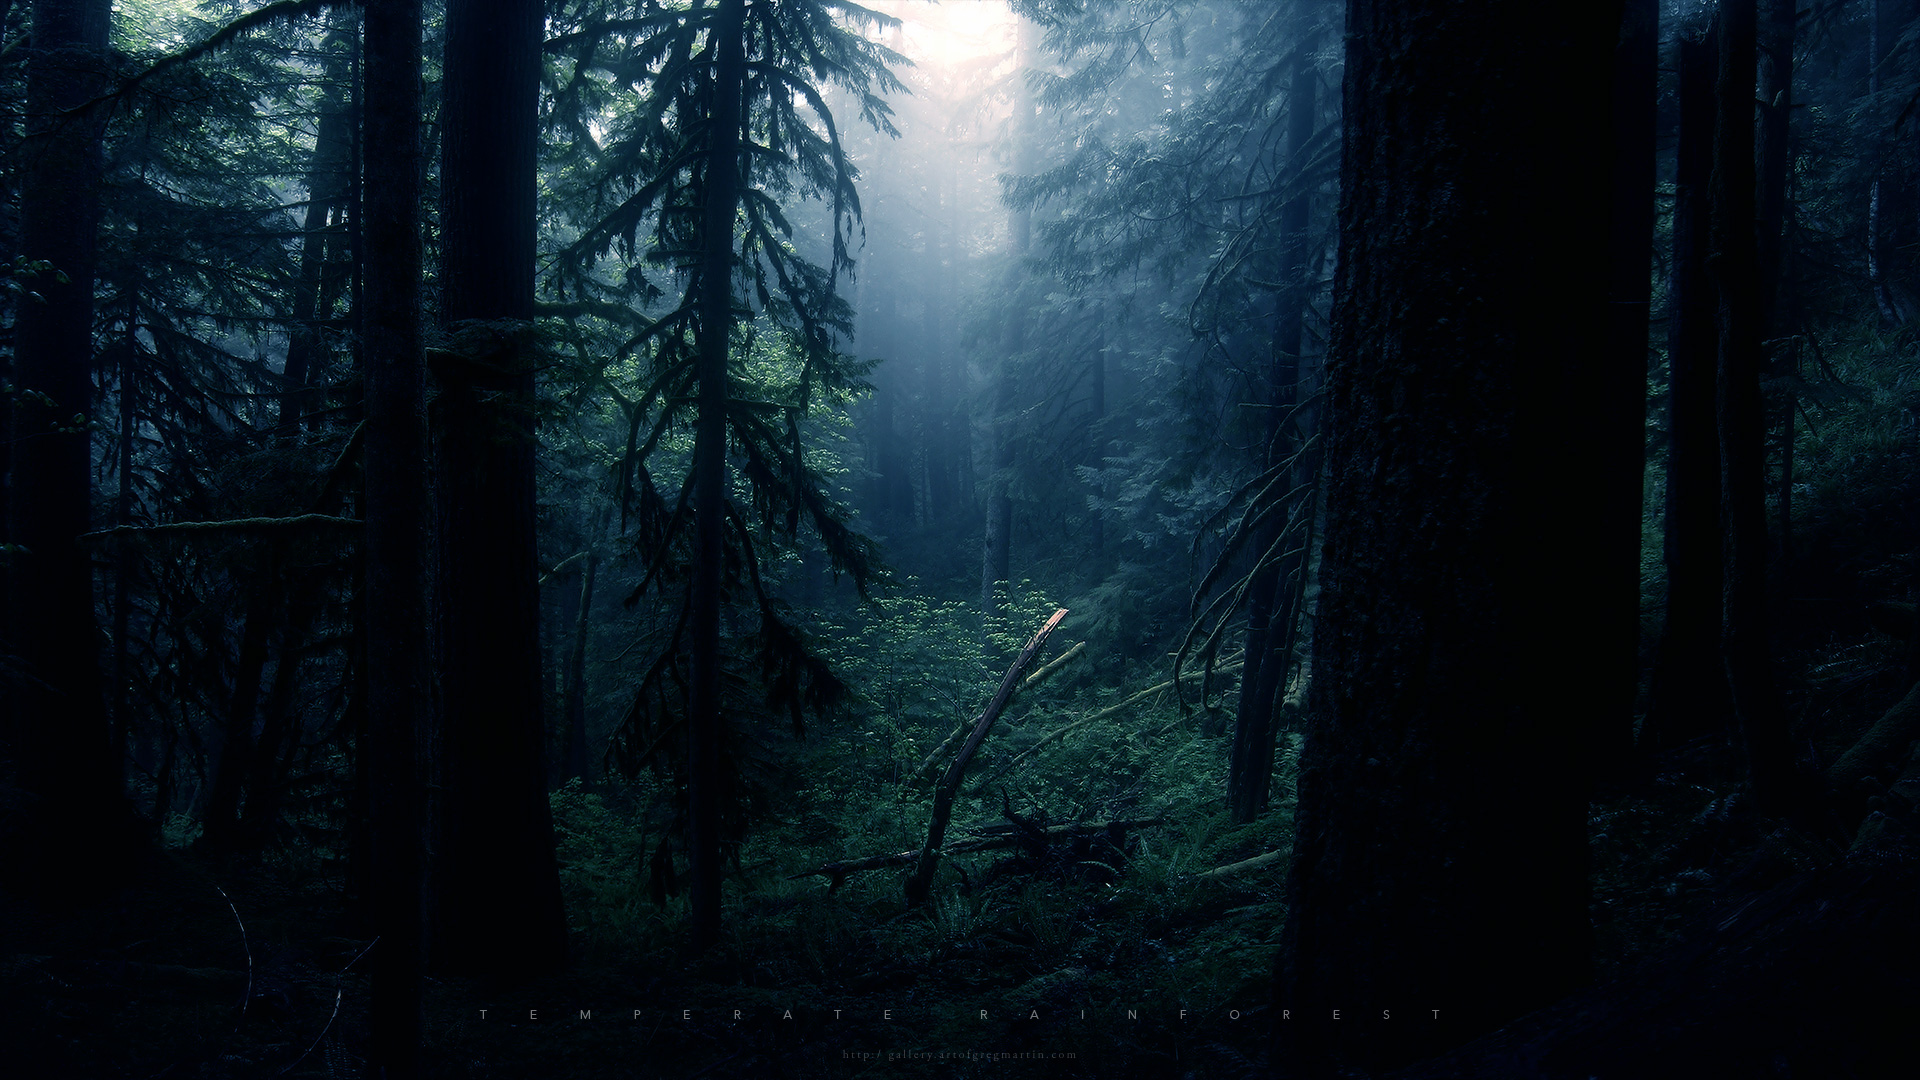 nature, trees, forests - desktop wallpaper